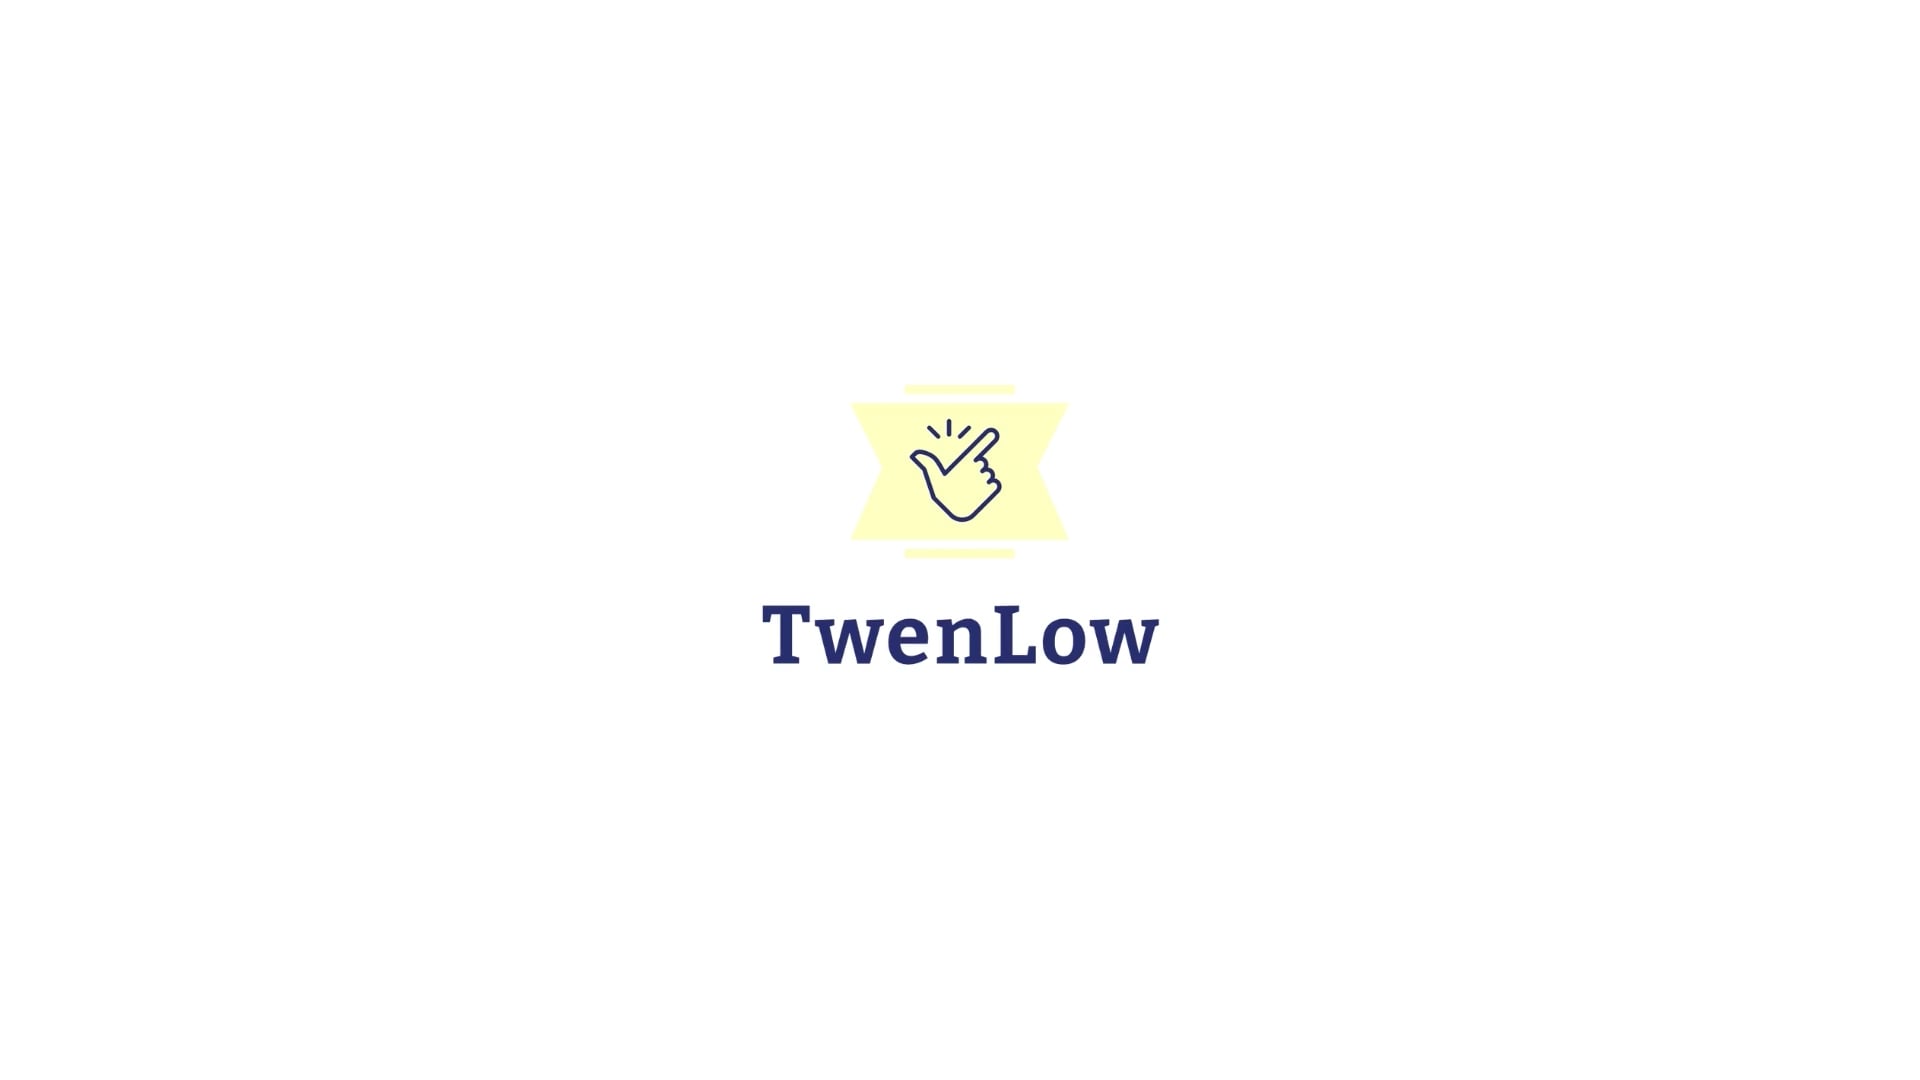 Twenlow